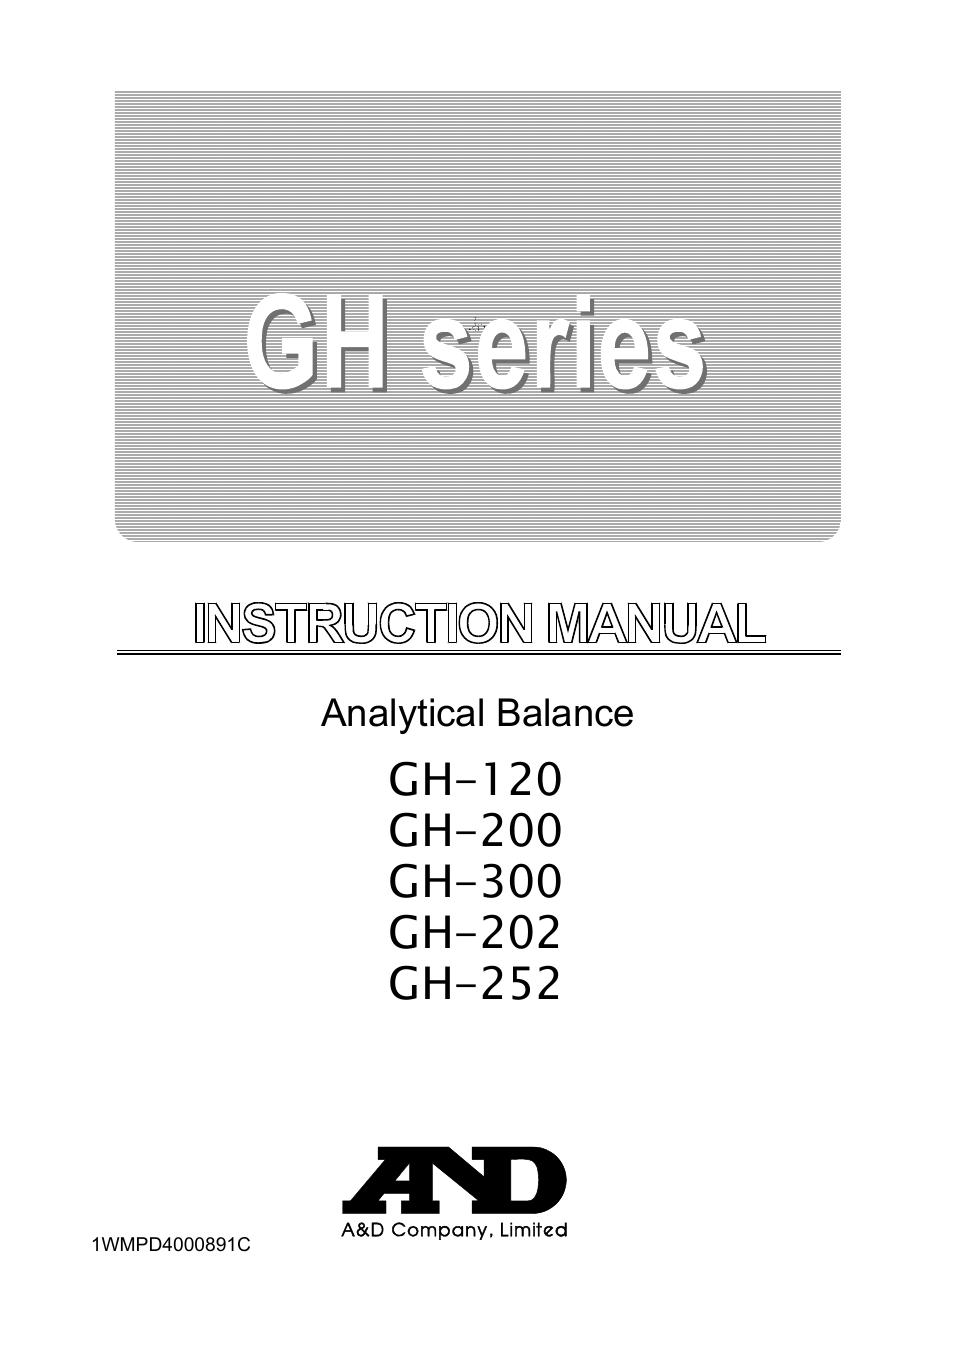 A & D Analytical Balance GH-120/GH-200/GH-300/GH-202/GH-252 (Page 1)